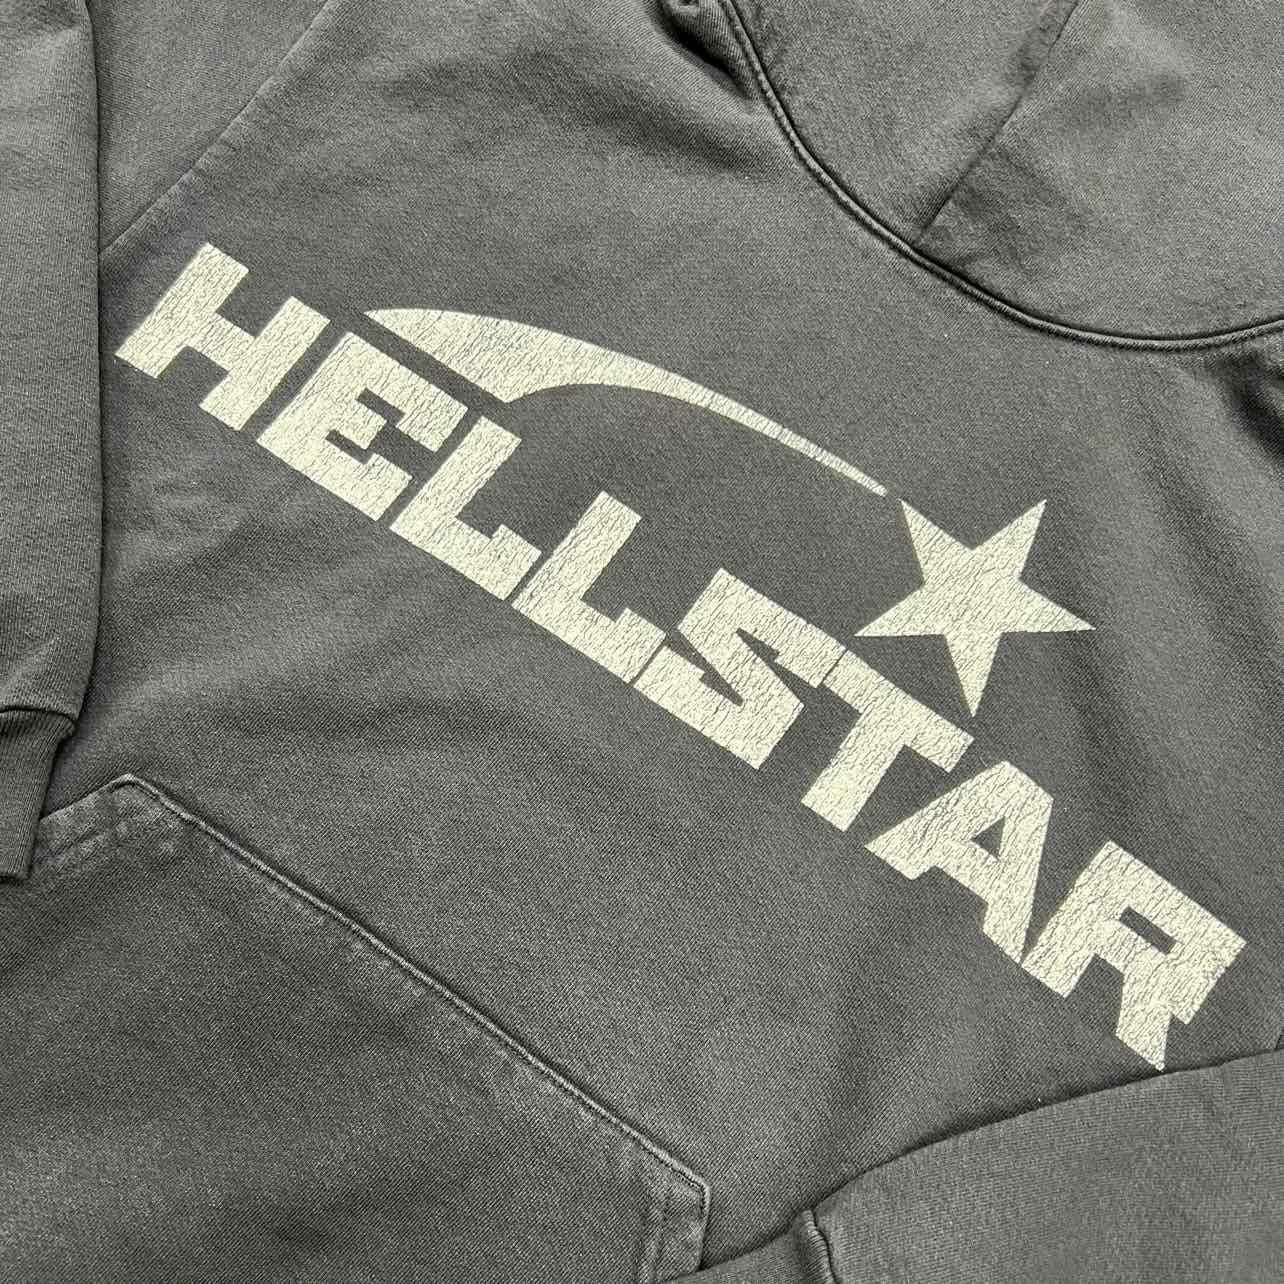 Hellstar Hoodie "UNIFORM" Black New Size S